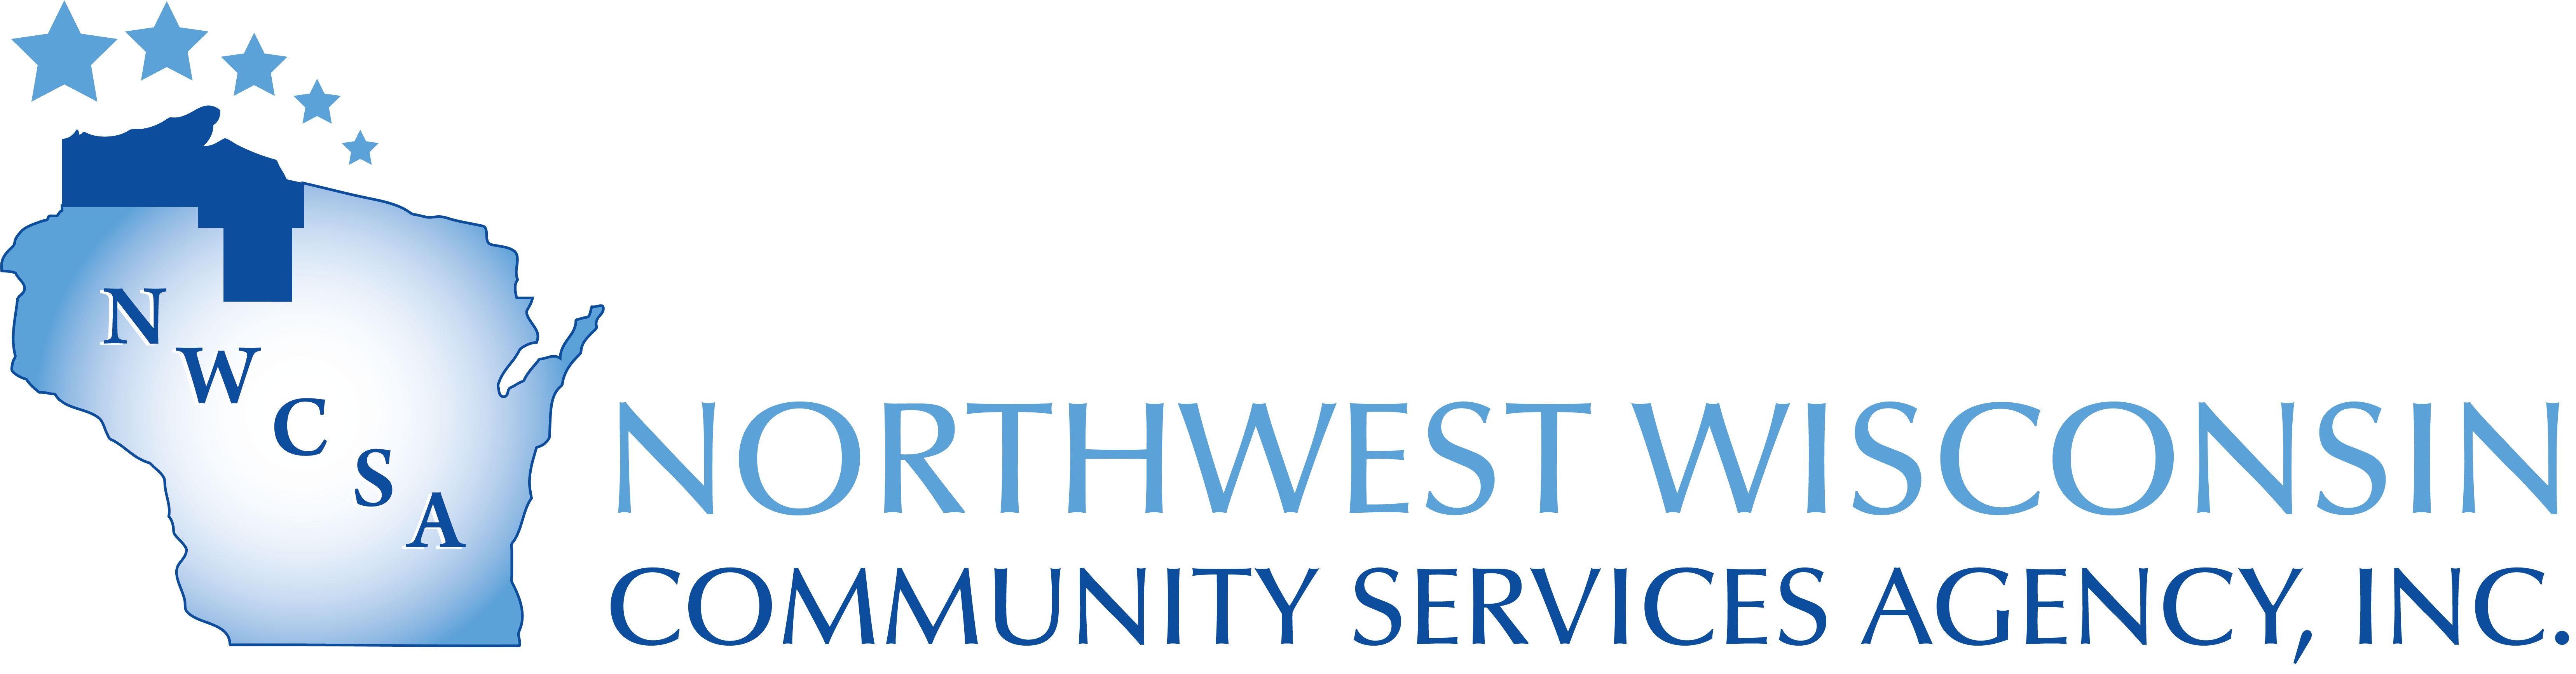 Northwest Wisconsin Community Services Agency, Inc.